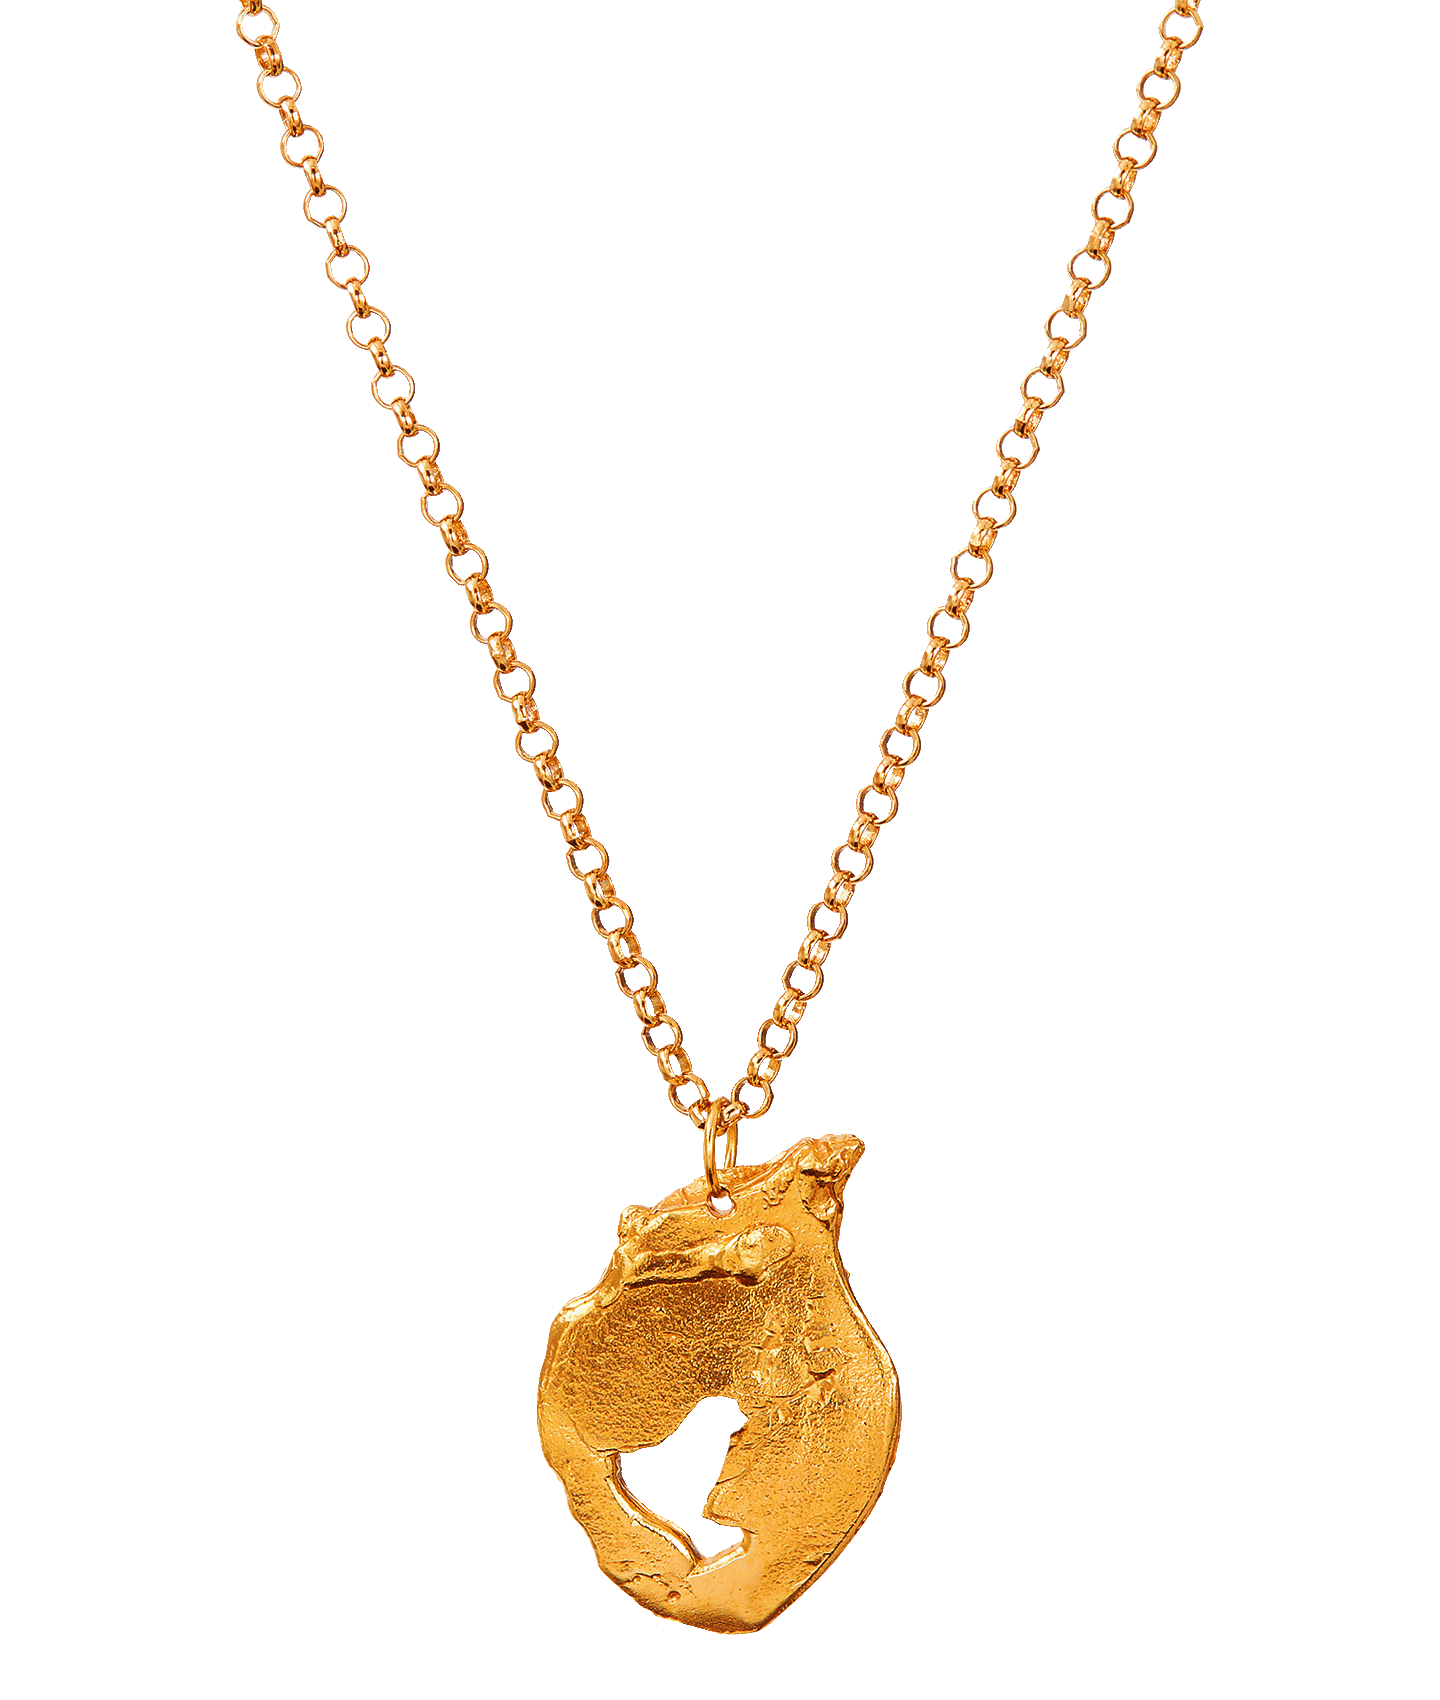 The Spellbinding Amphora Necklace